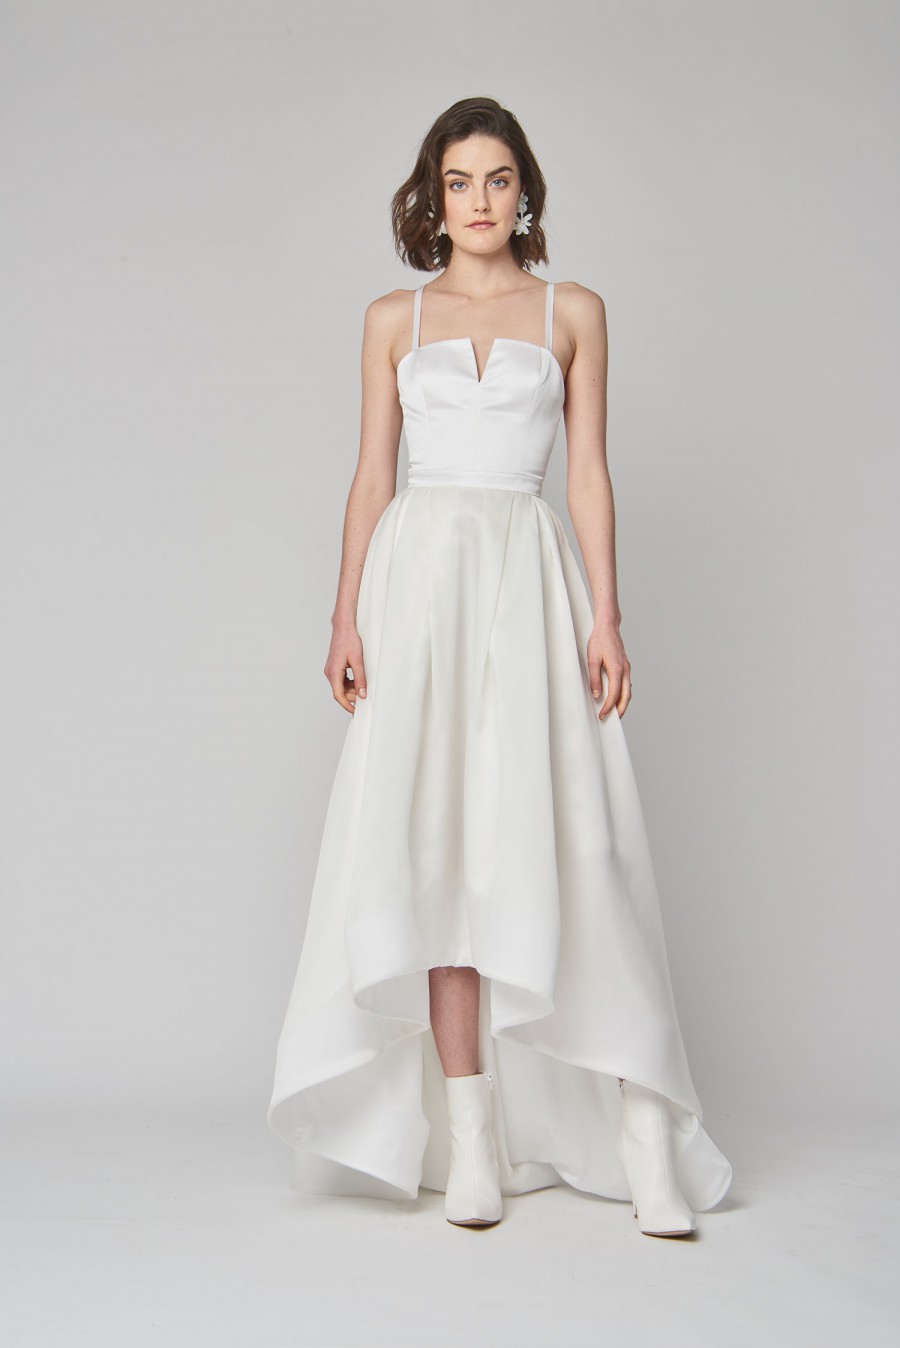 20 Clean & Simple Wedding Dress Designs – Stillwhite Blog